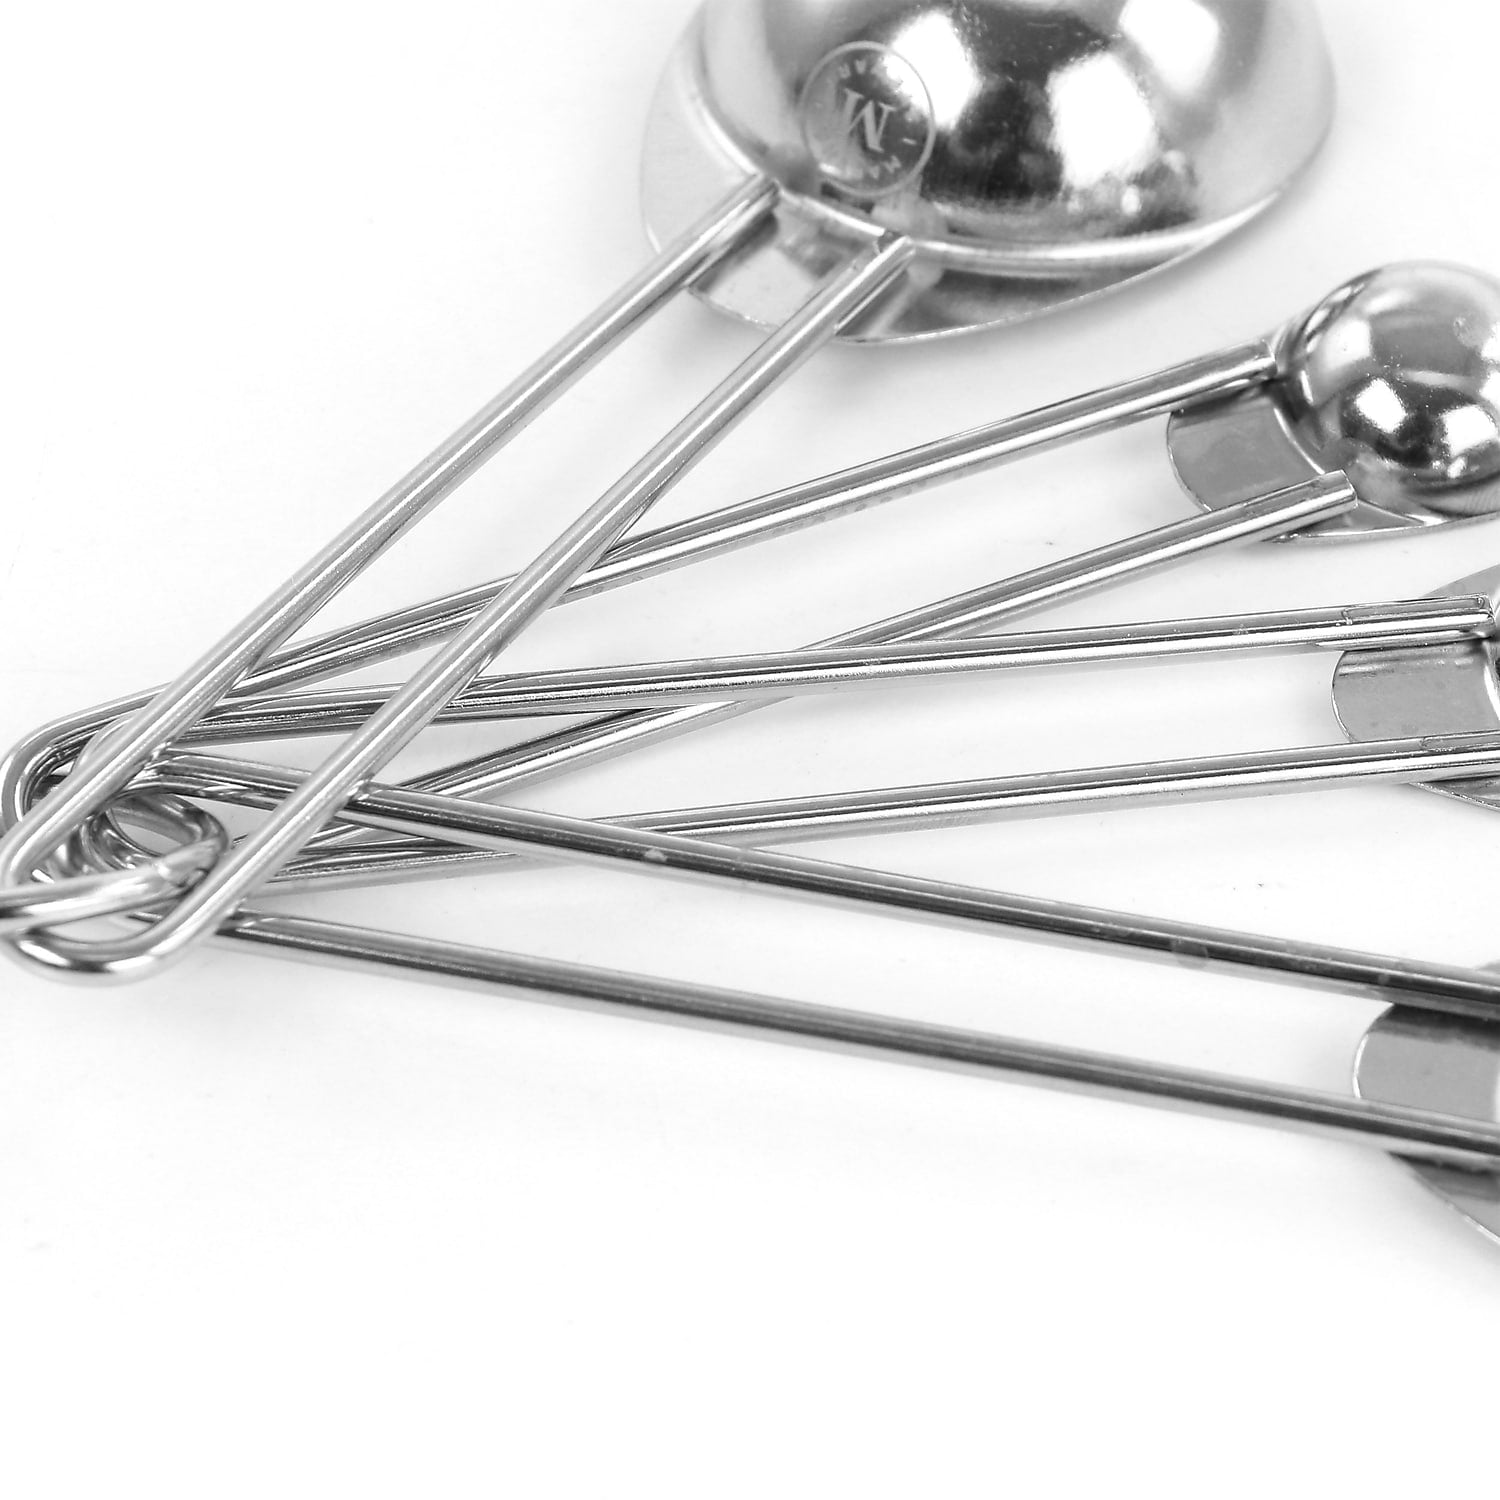 Stainless Steel Rectangular Measuring Spoons - 2749911508030p - 33